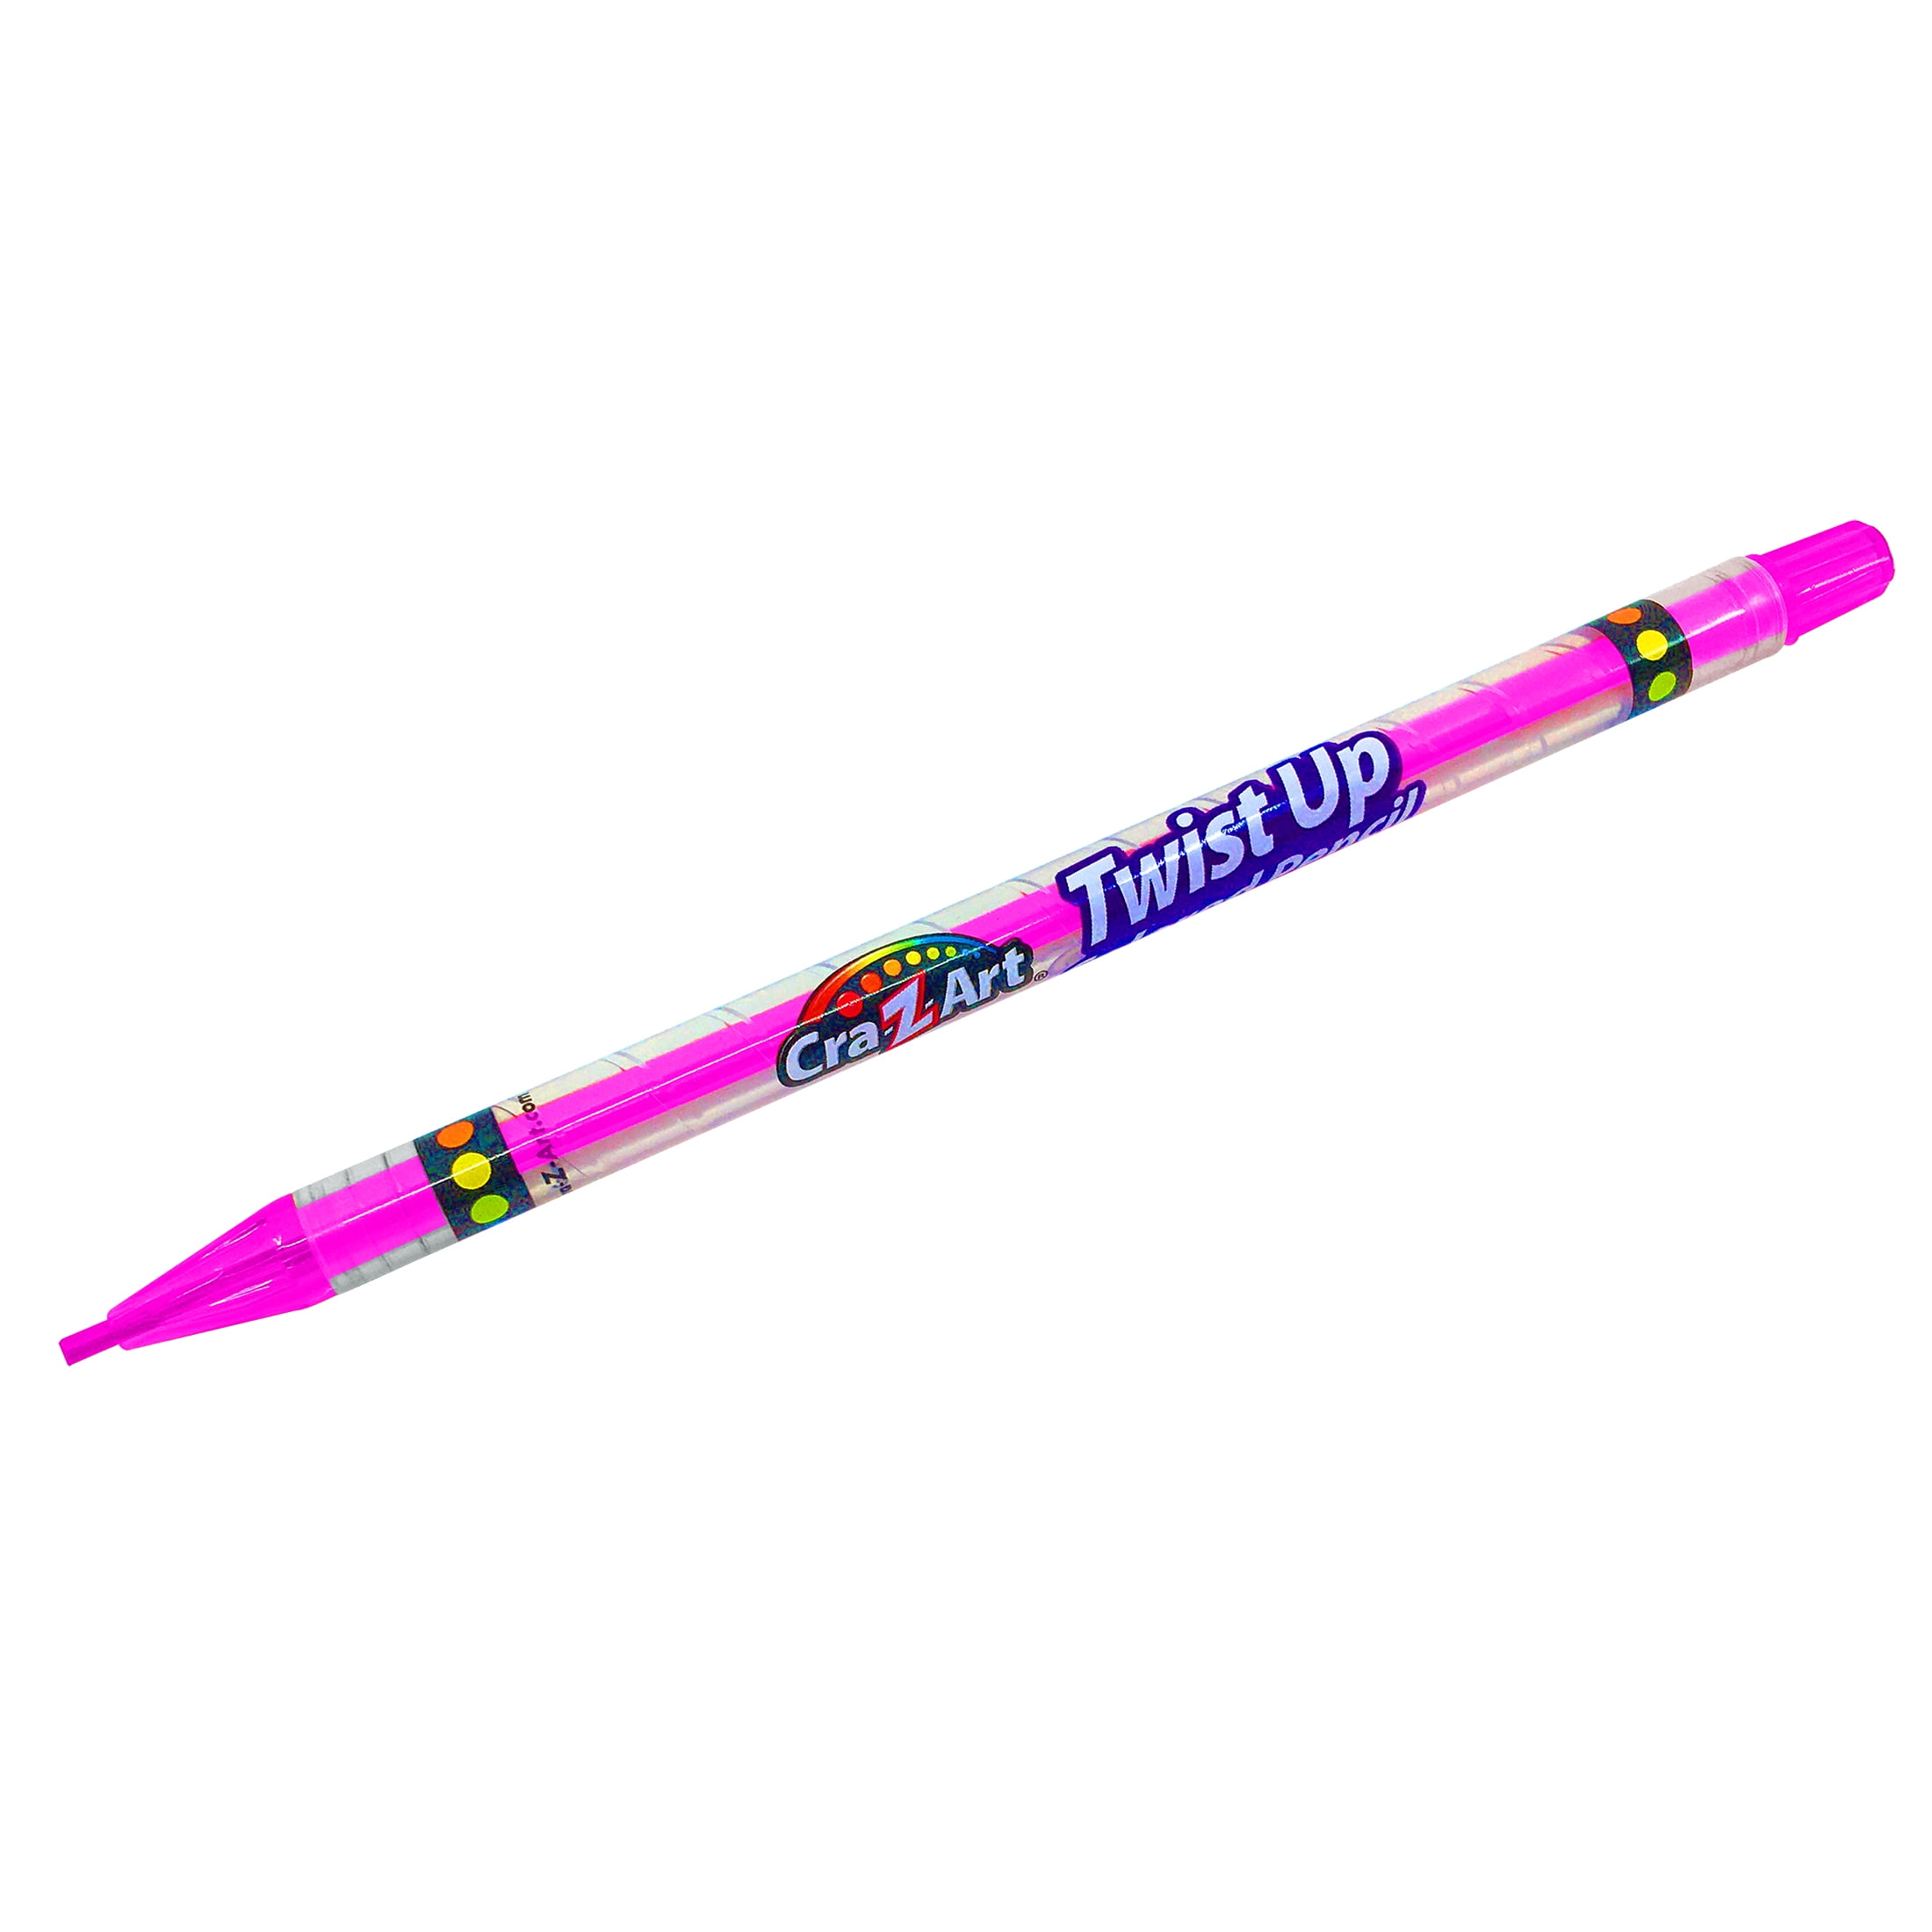 Return of the Return of Cra-Z-Art Neon Colored Pencils 